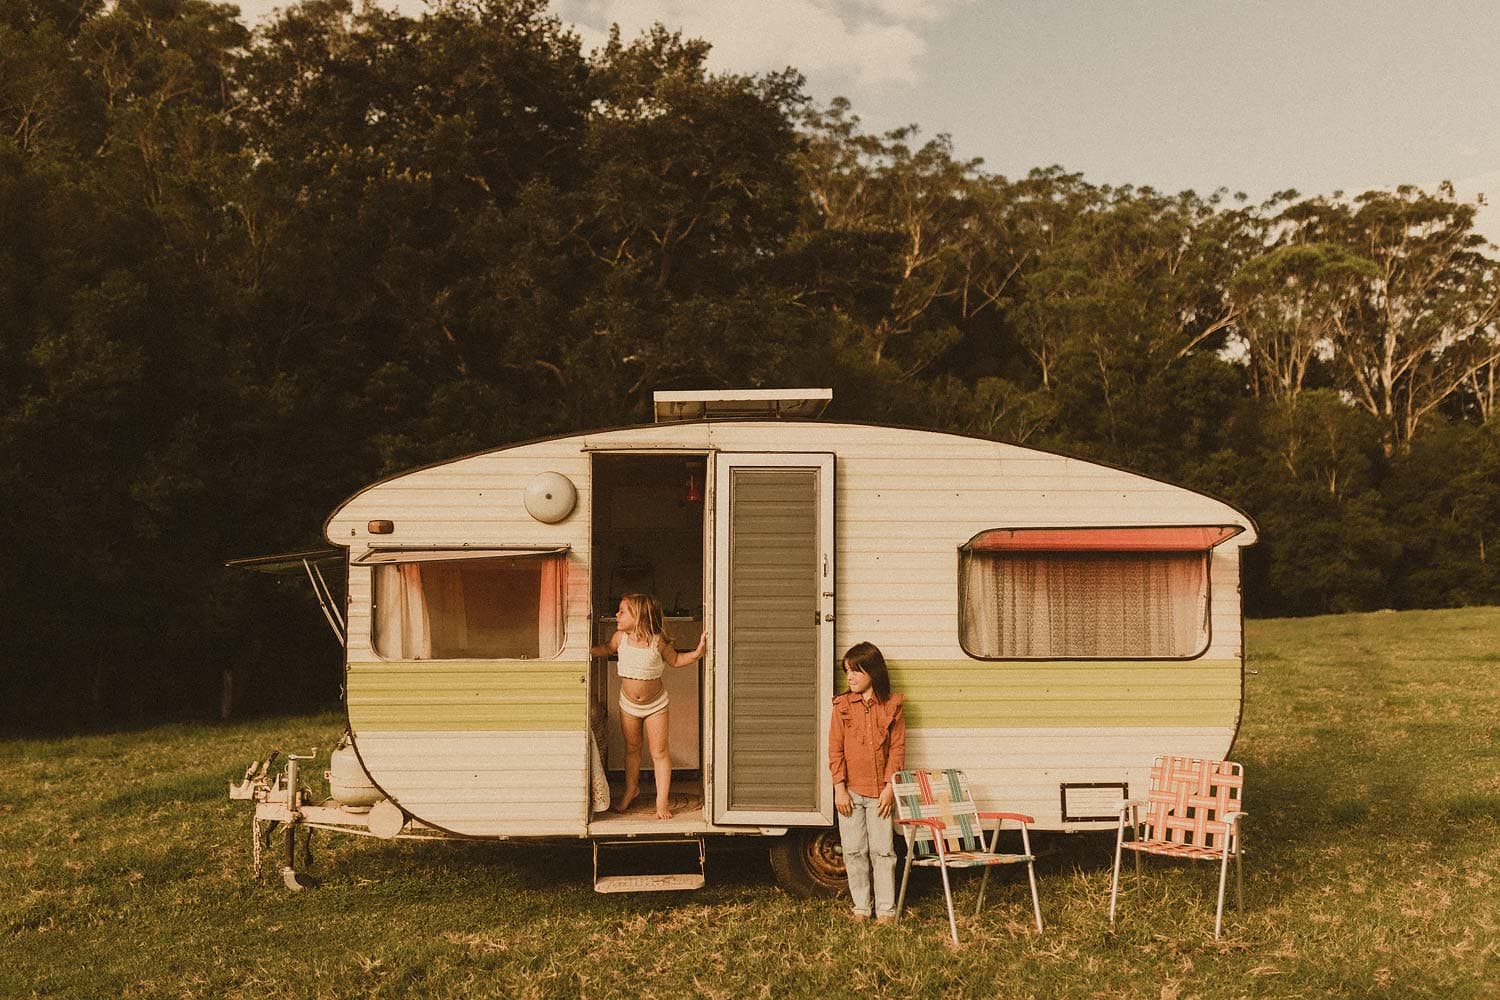 Sydney-inner-west-family-photographer-siblings-play-hide-and-seek-in-retro-caravan-set-in-grassy-meadow-with-vintage-deck-chairs